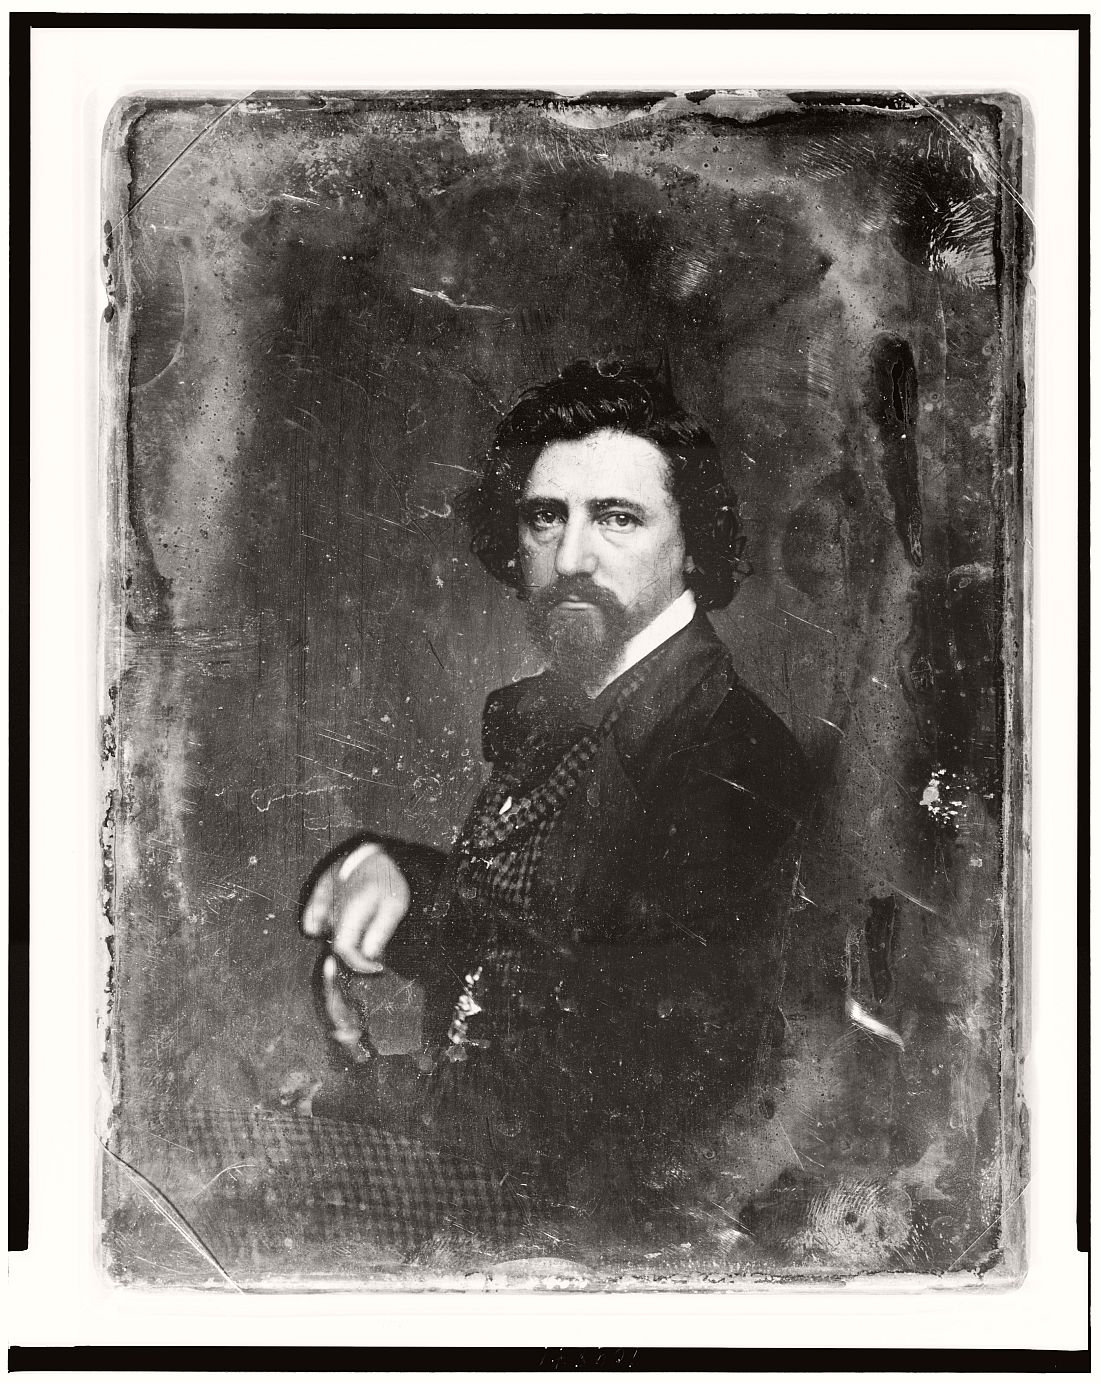 vintage-daguerreotype-portraits-from-xix-century-1844-1860-06